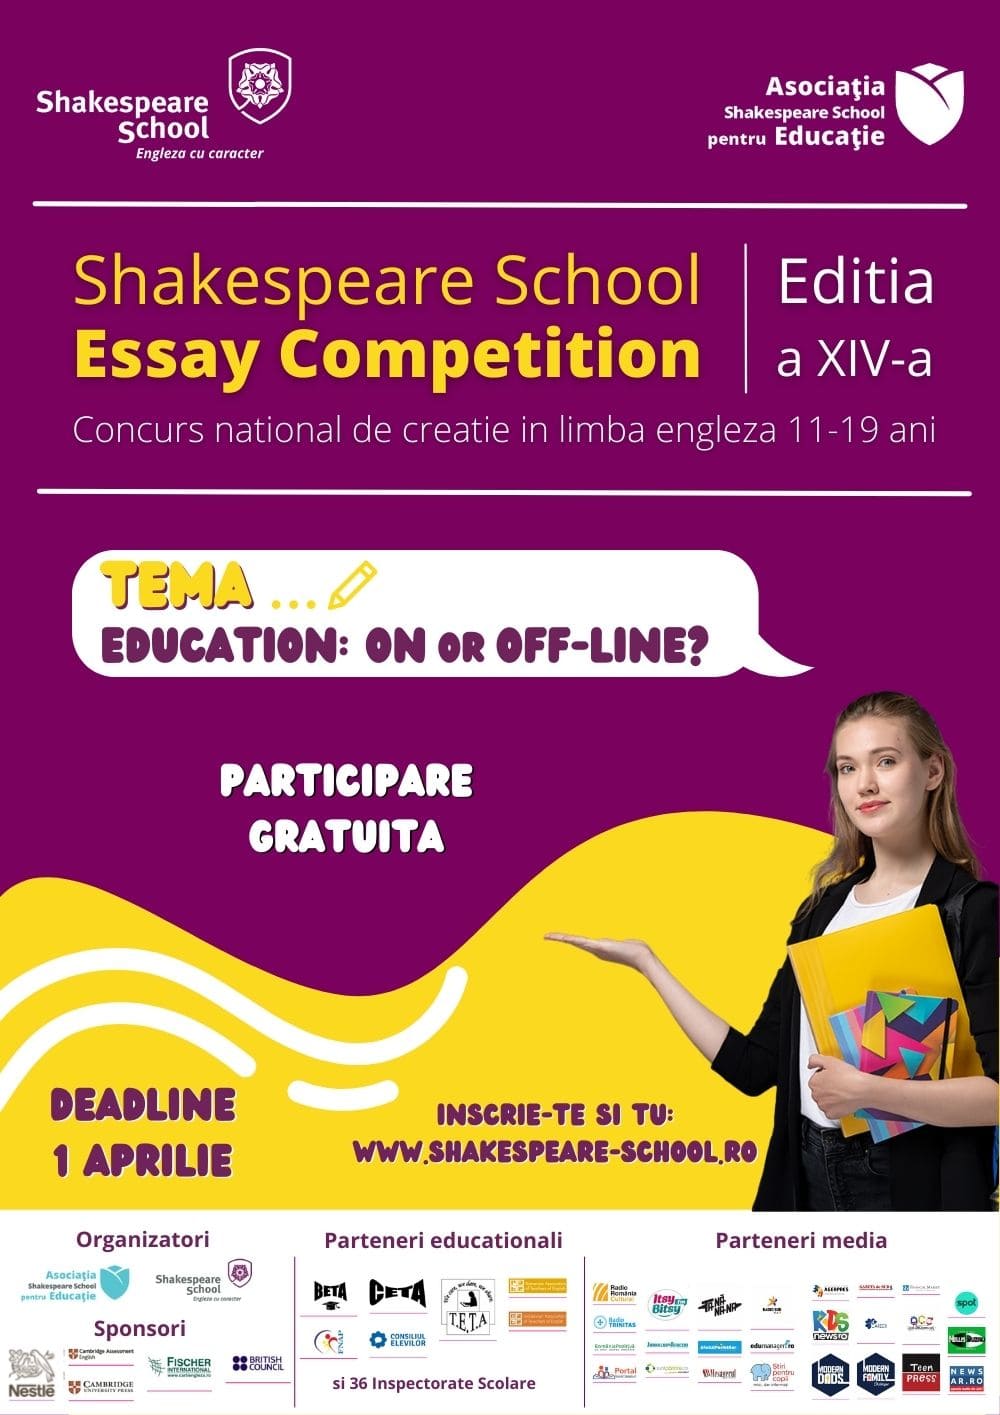 Essay Competion Shakespeare School 2022